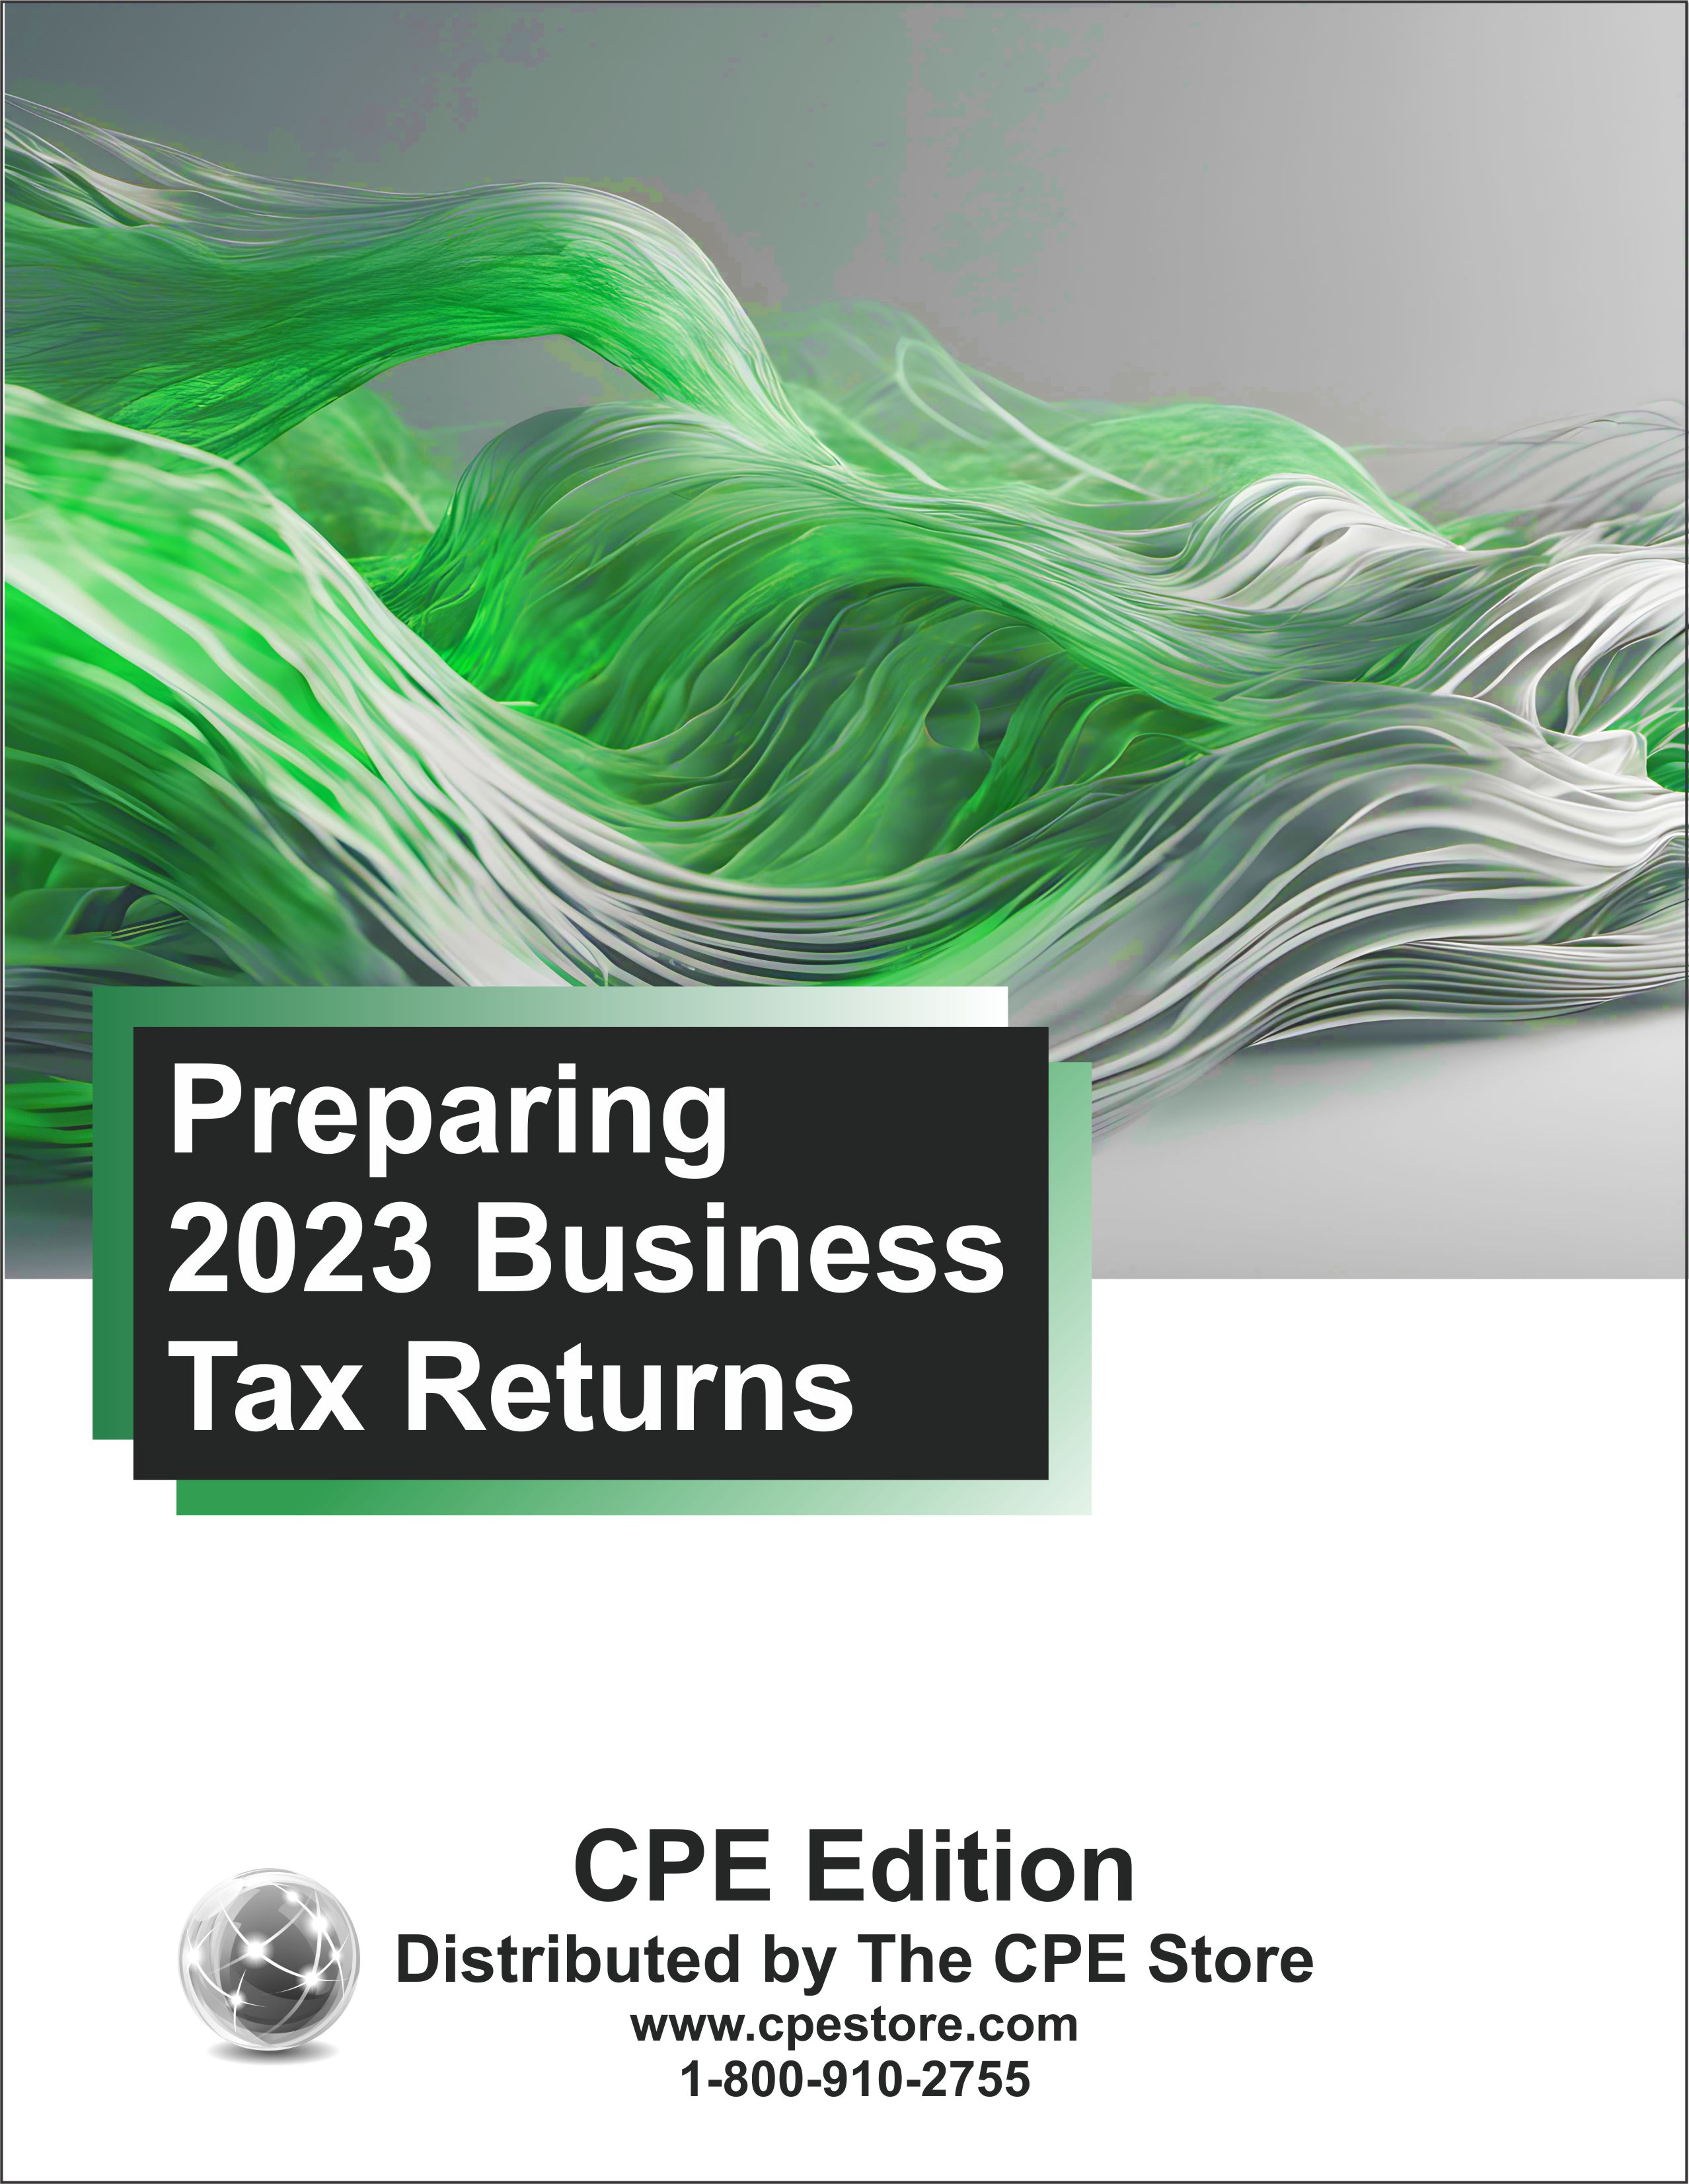 Preparing 2023 Business Tax Returns